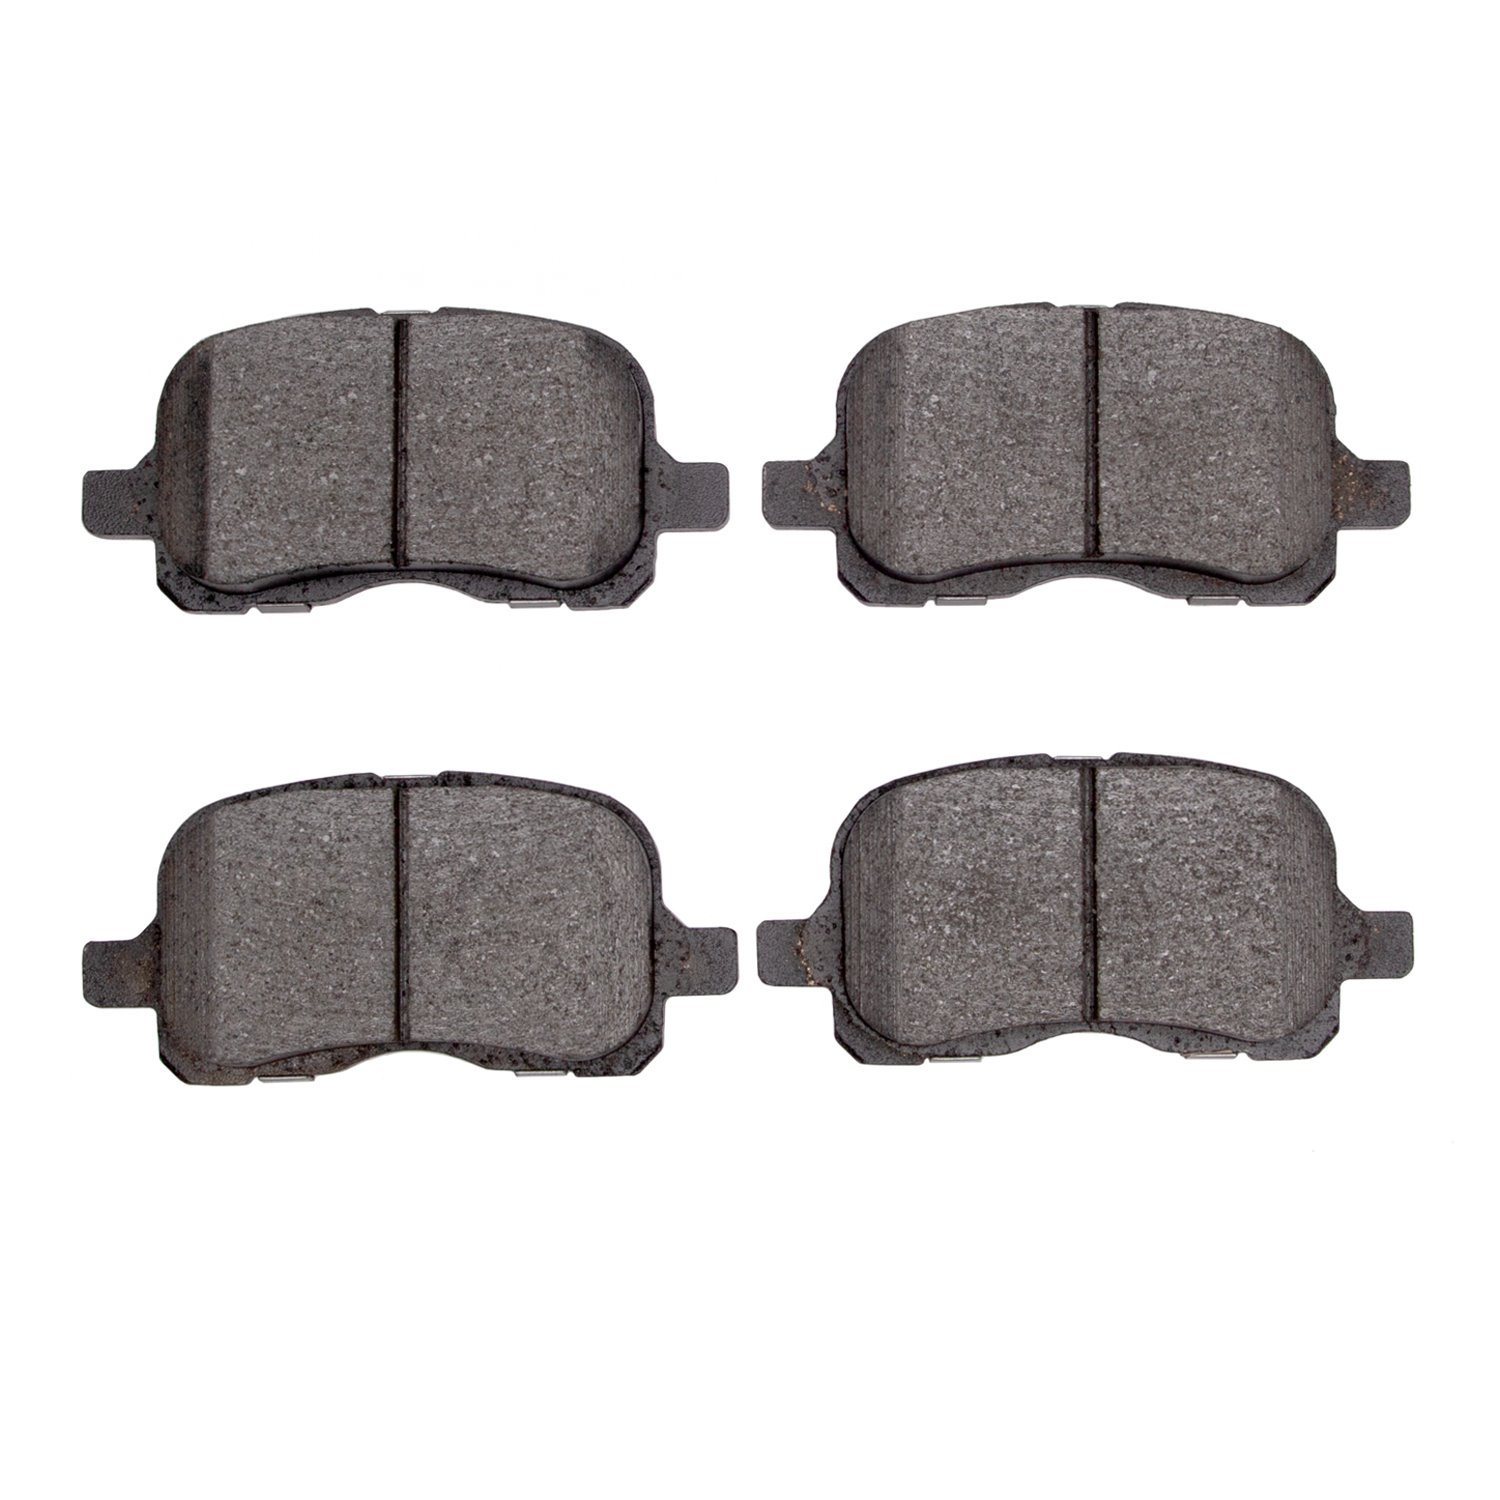 Semi-Metallic Brake Pads, 1998-2002 Fits Multiple Makes/Models, Position: Front